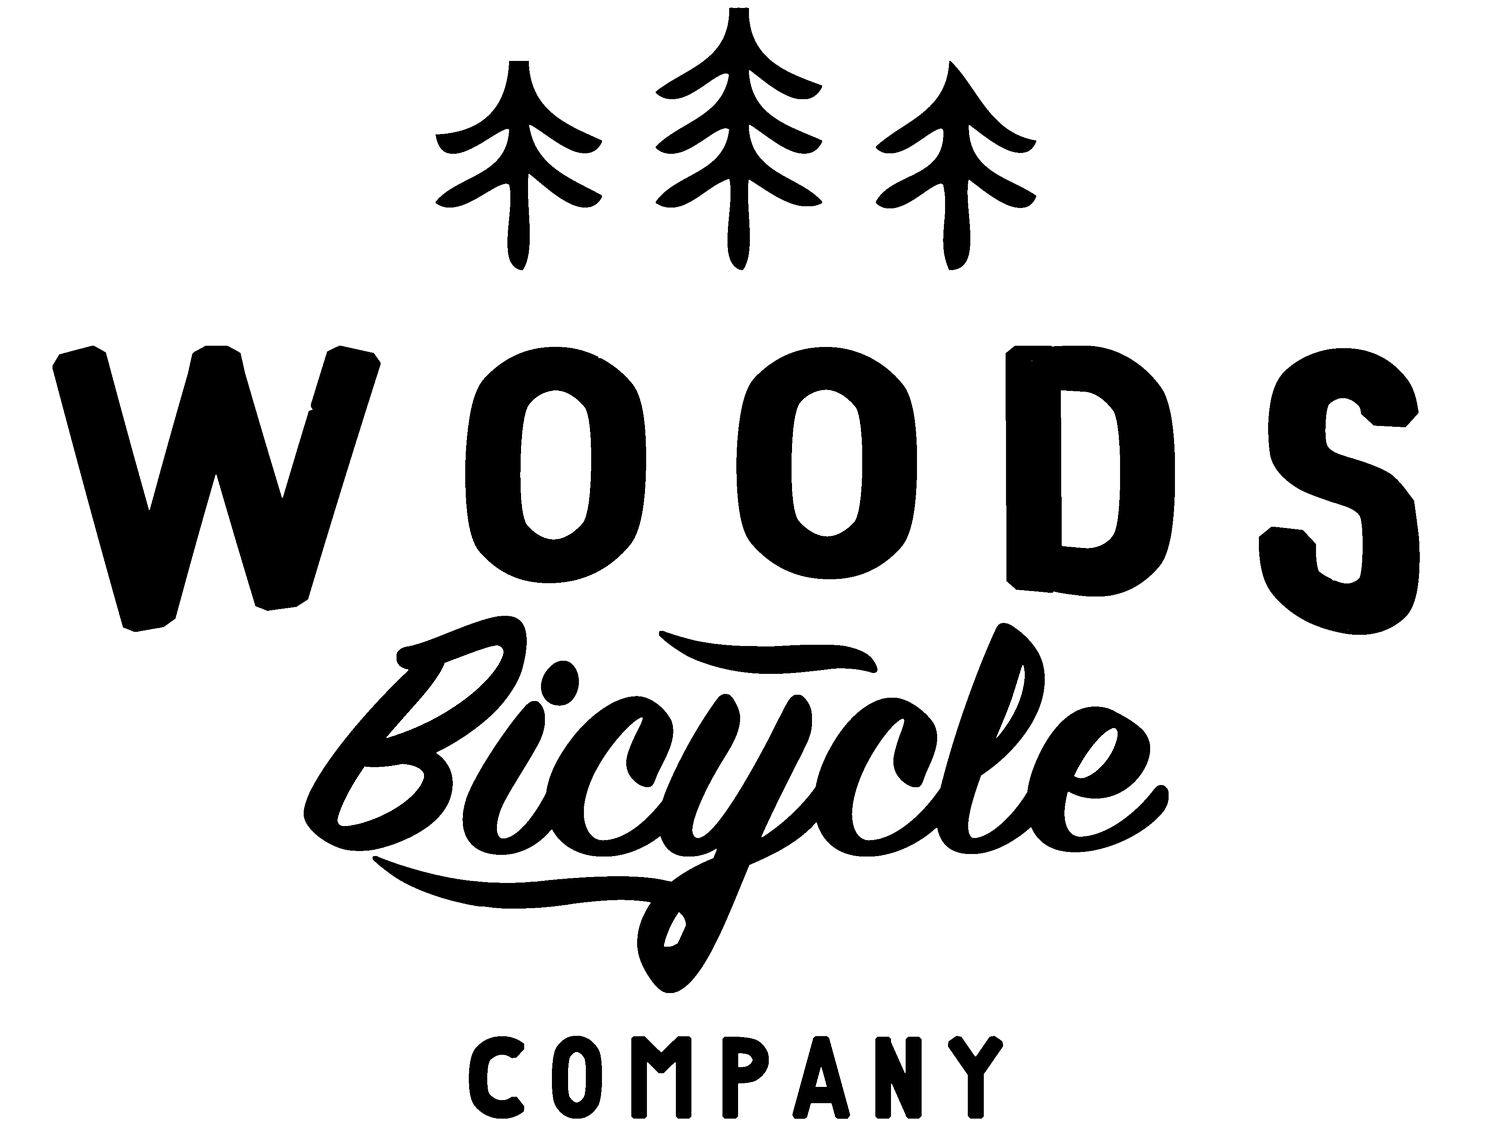 Woods Bicycle Company